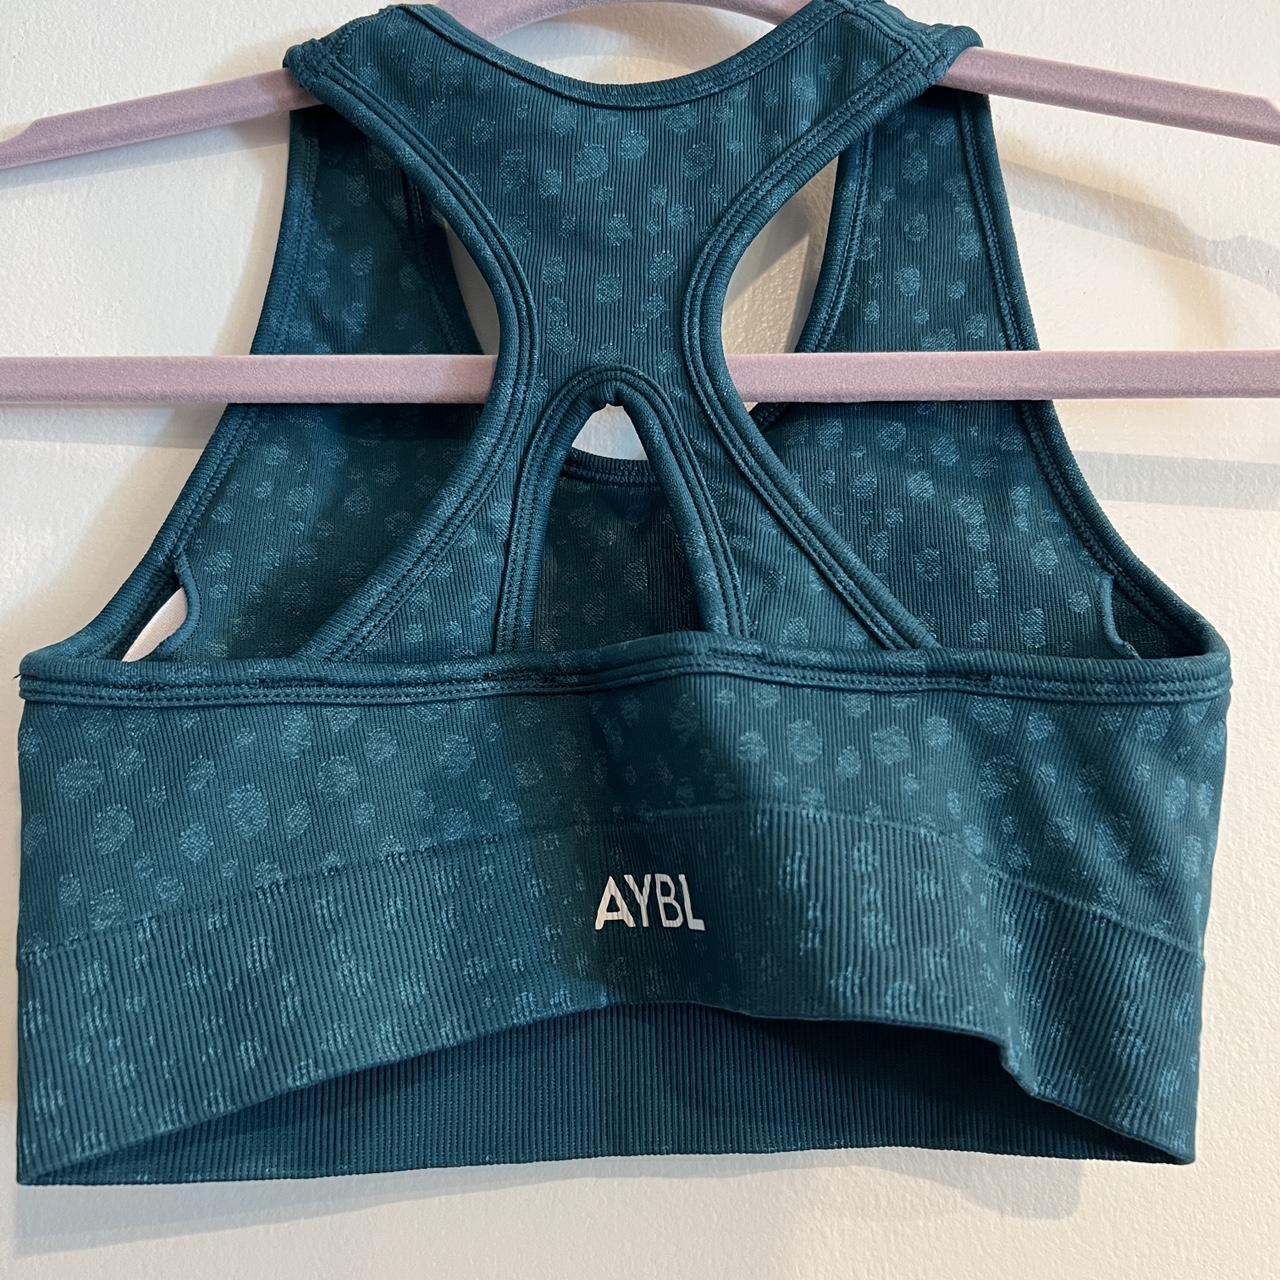 AYBL evolve speckle seamless sports bra and leggings